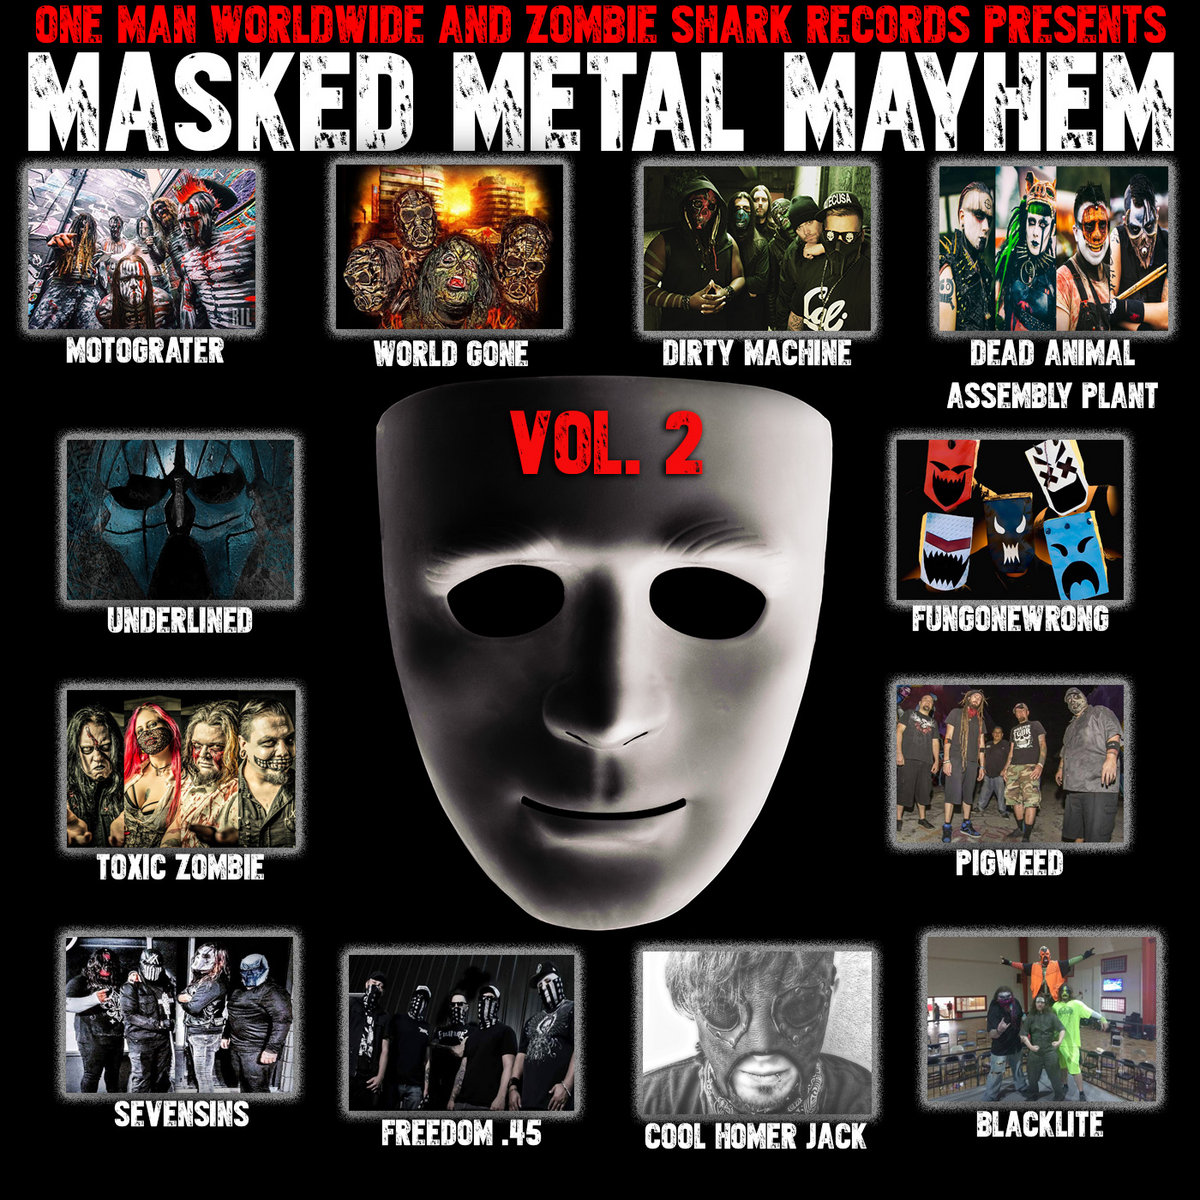 metal mayhem records